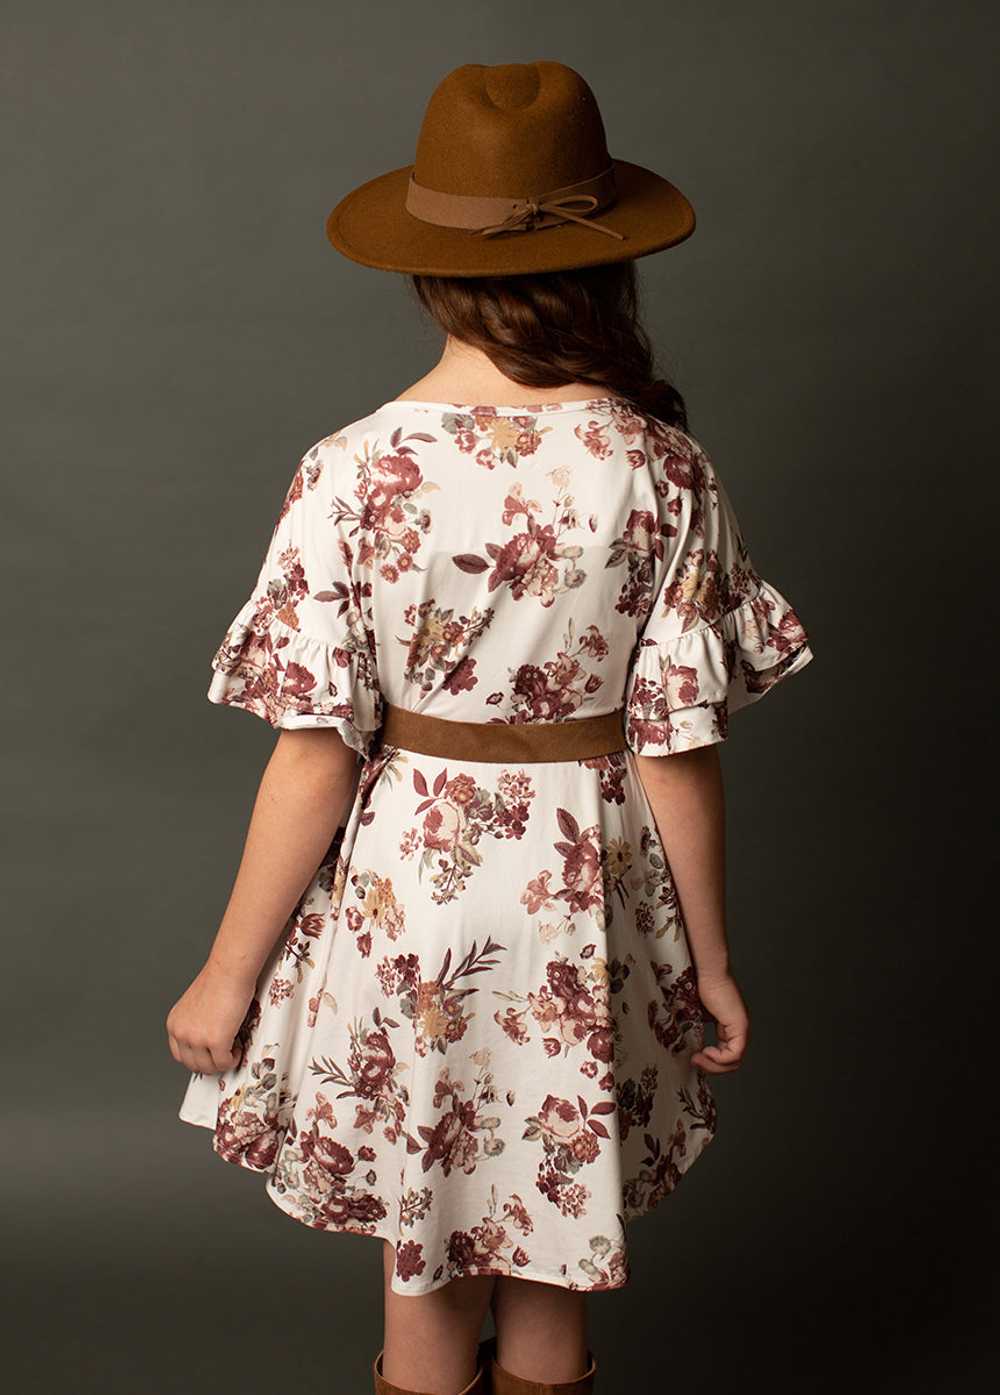 Joyfolie Emilia Dress in Ecru Floral - image 3